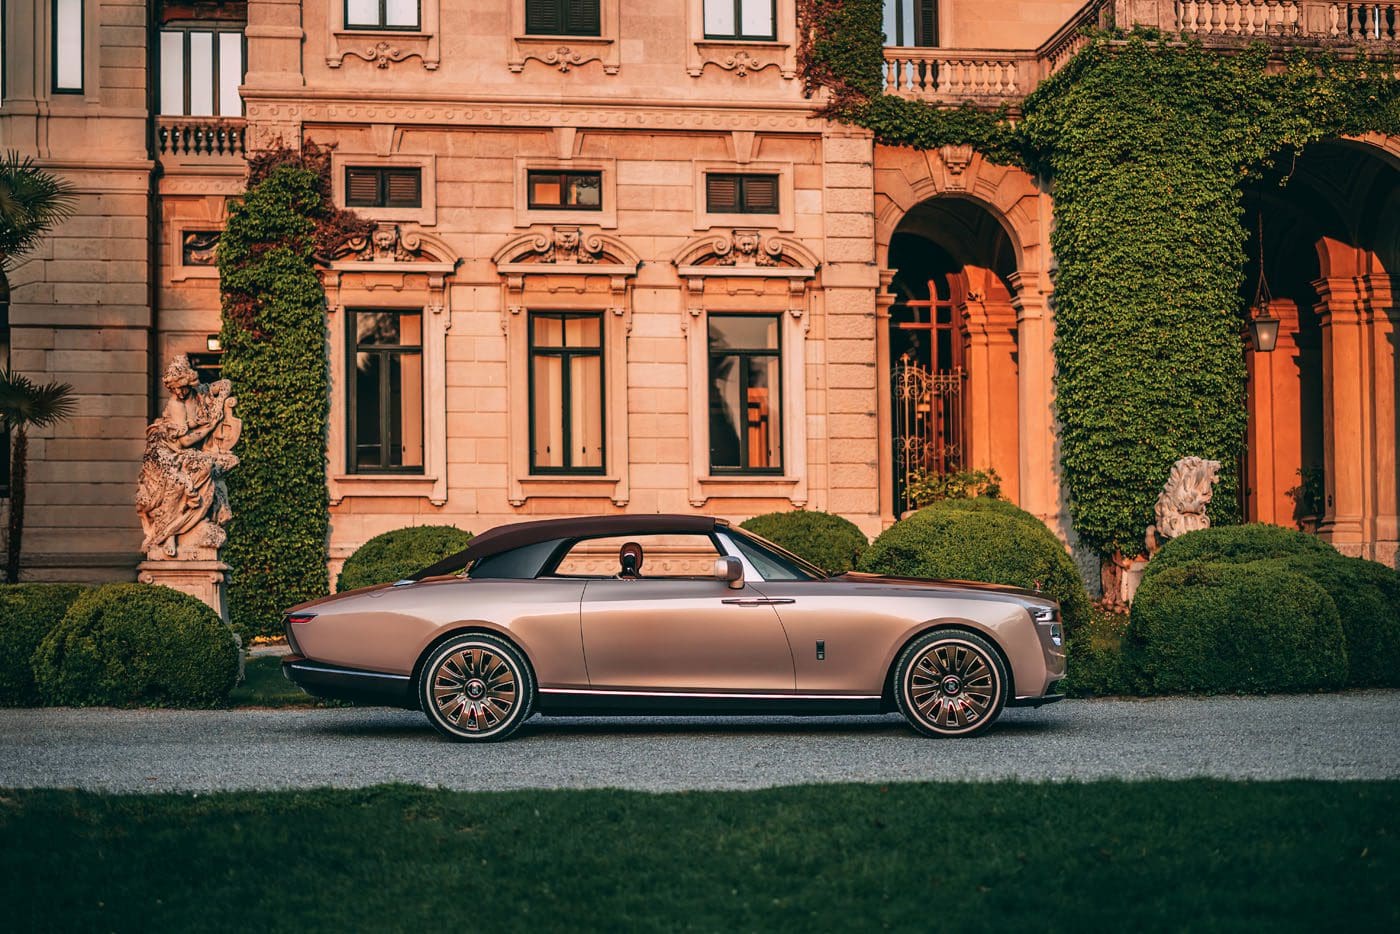 Rolls-Royce 'Boat Tail' Makes Global Debut At Prestigious Villa D'Este